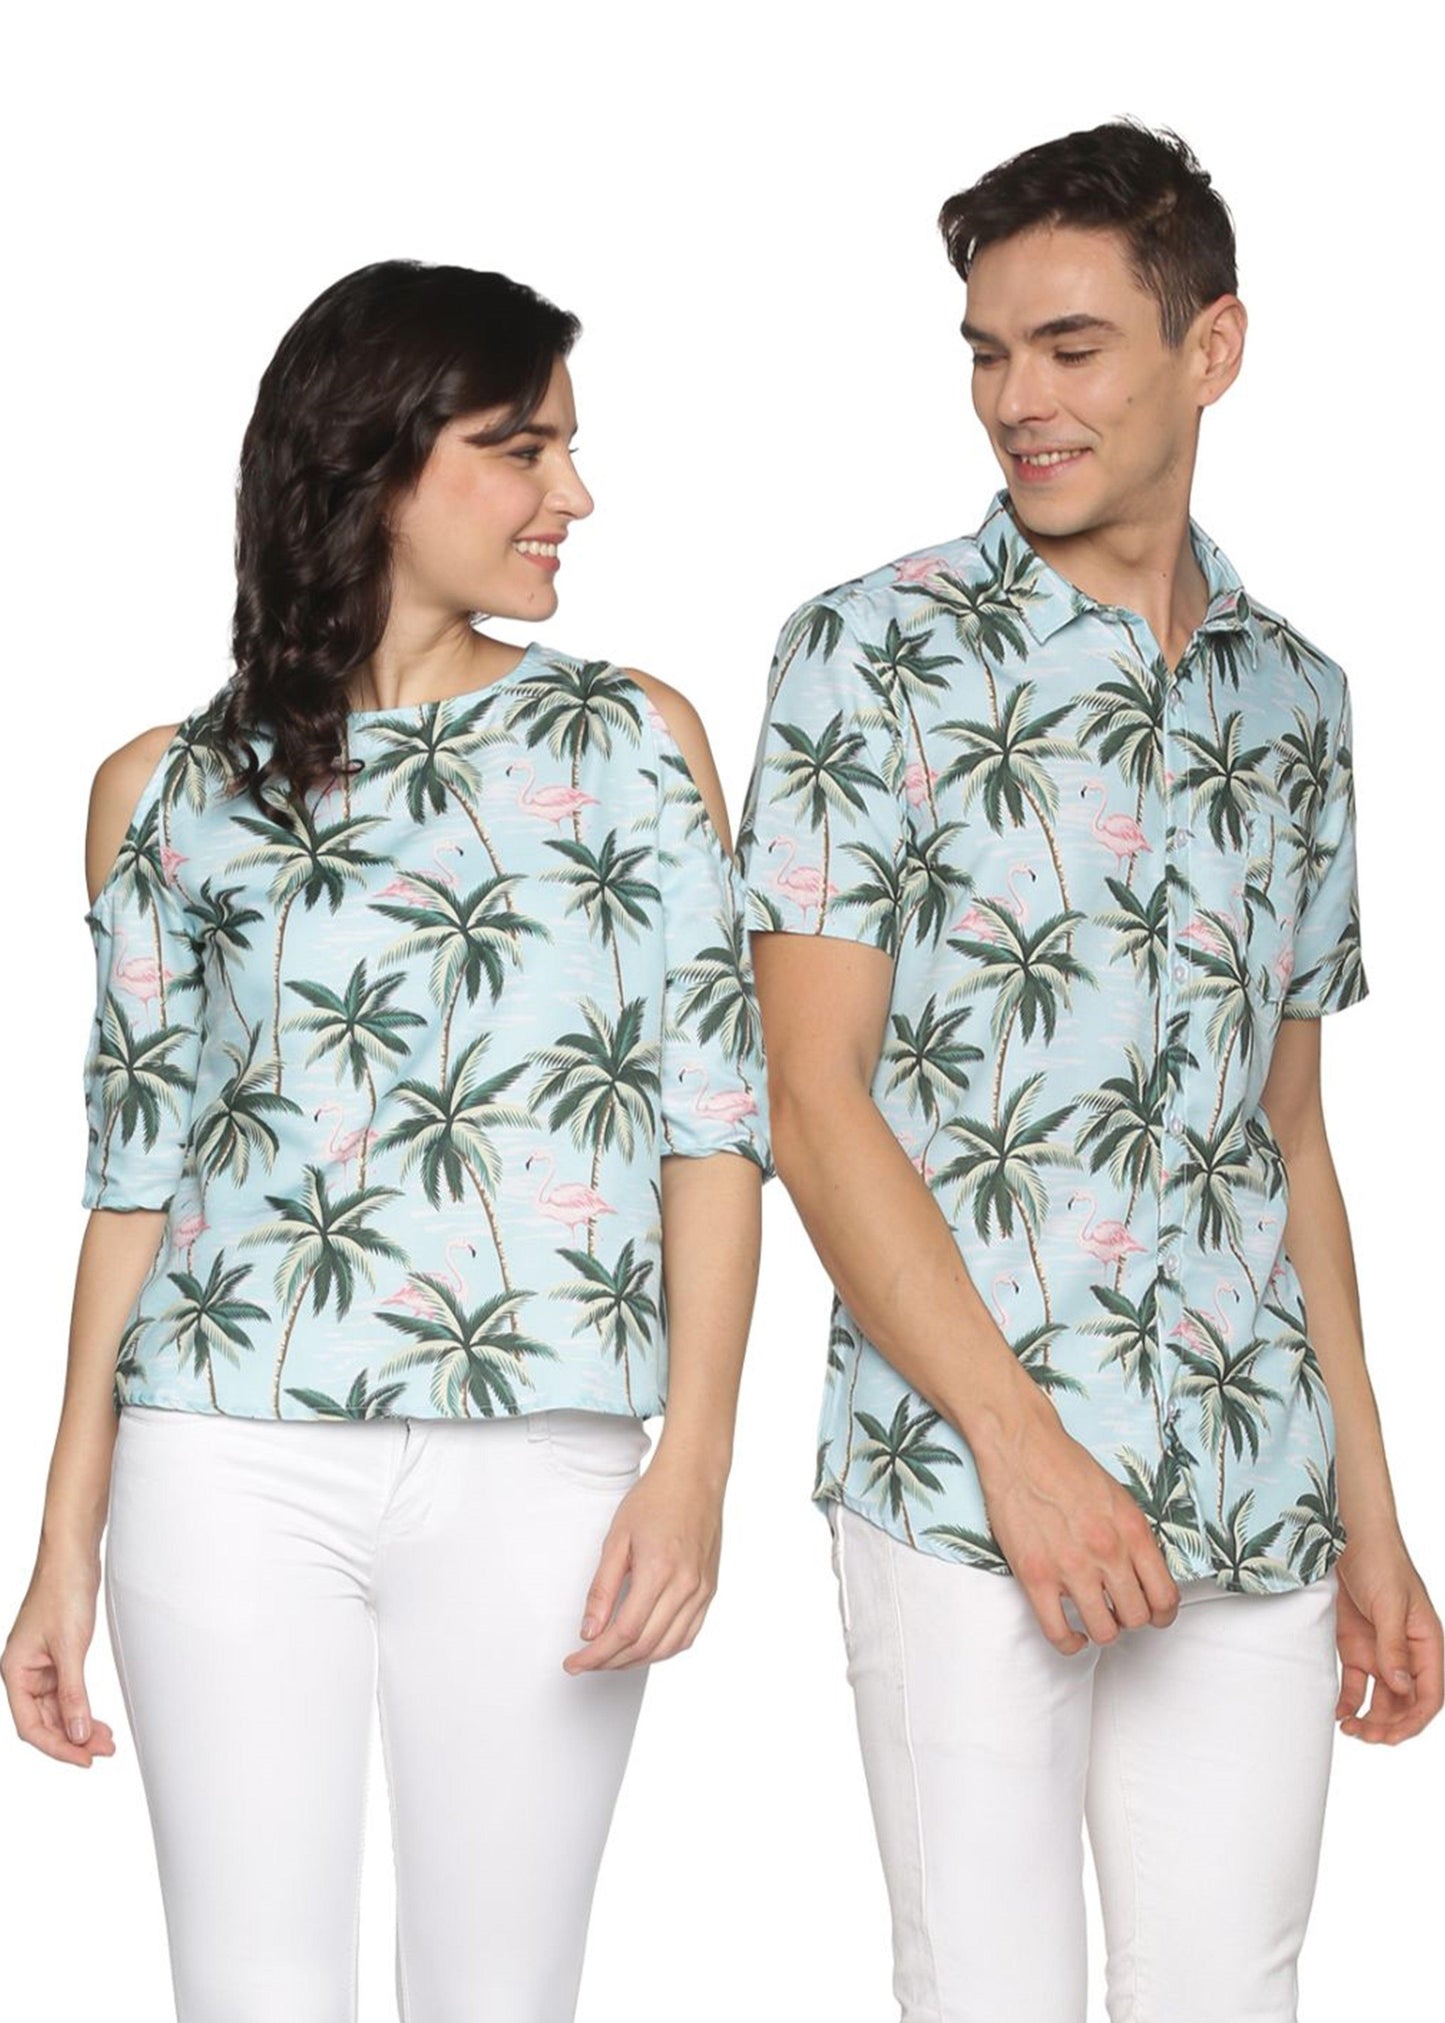 Bahamas Couple Matching Dress - Tusok